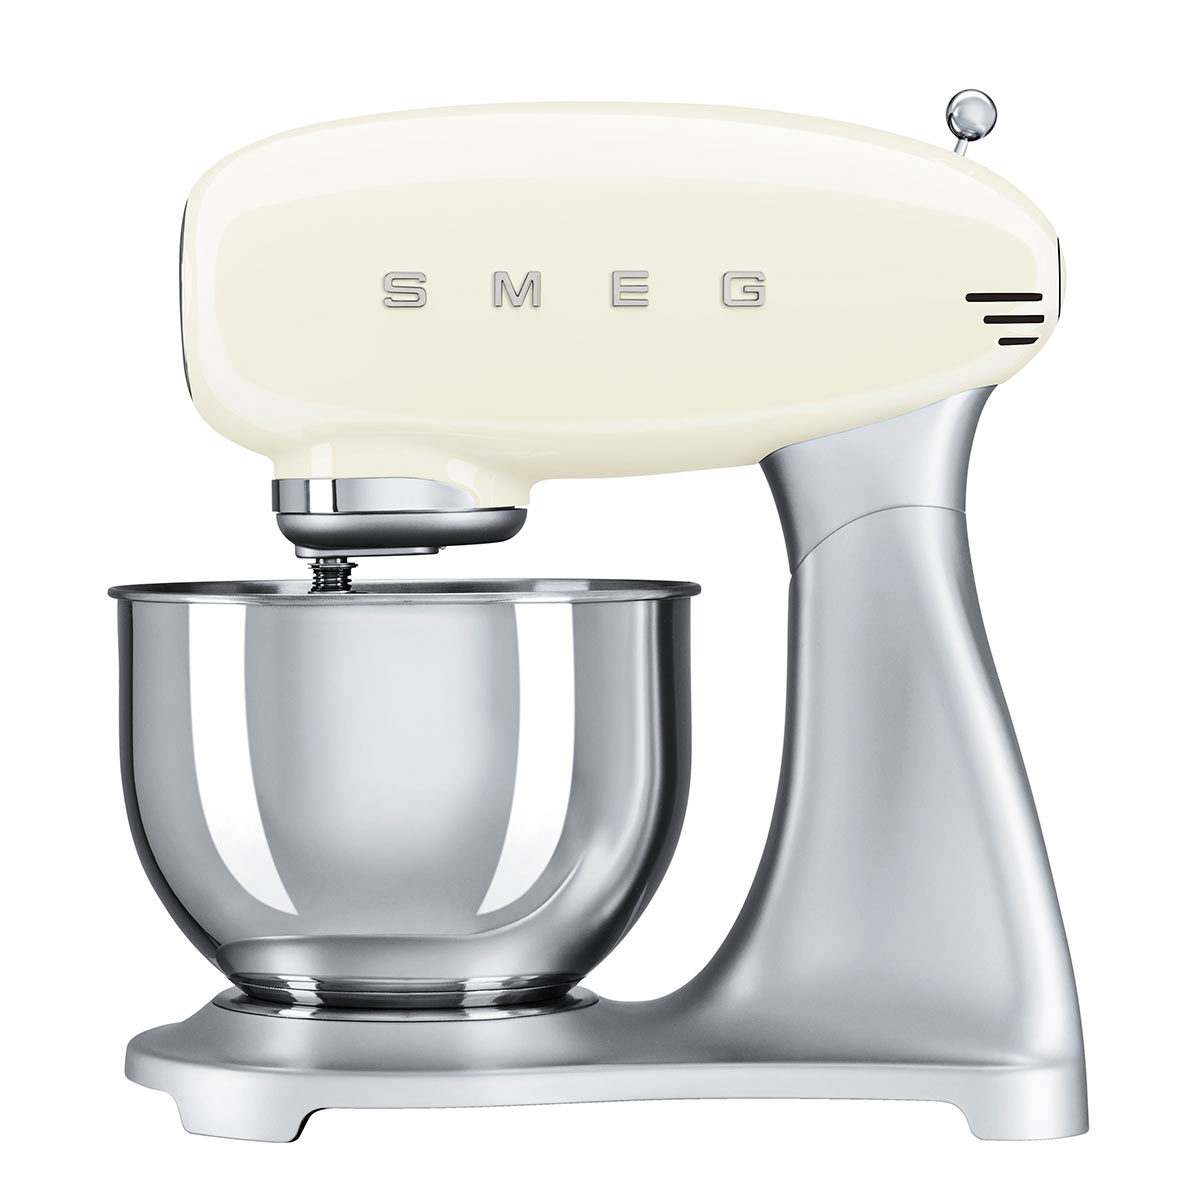 Smeg 50's Retro Style Aesthetic Stand Mixer Cream SMF01CRUK